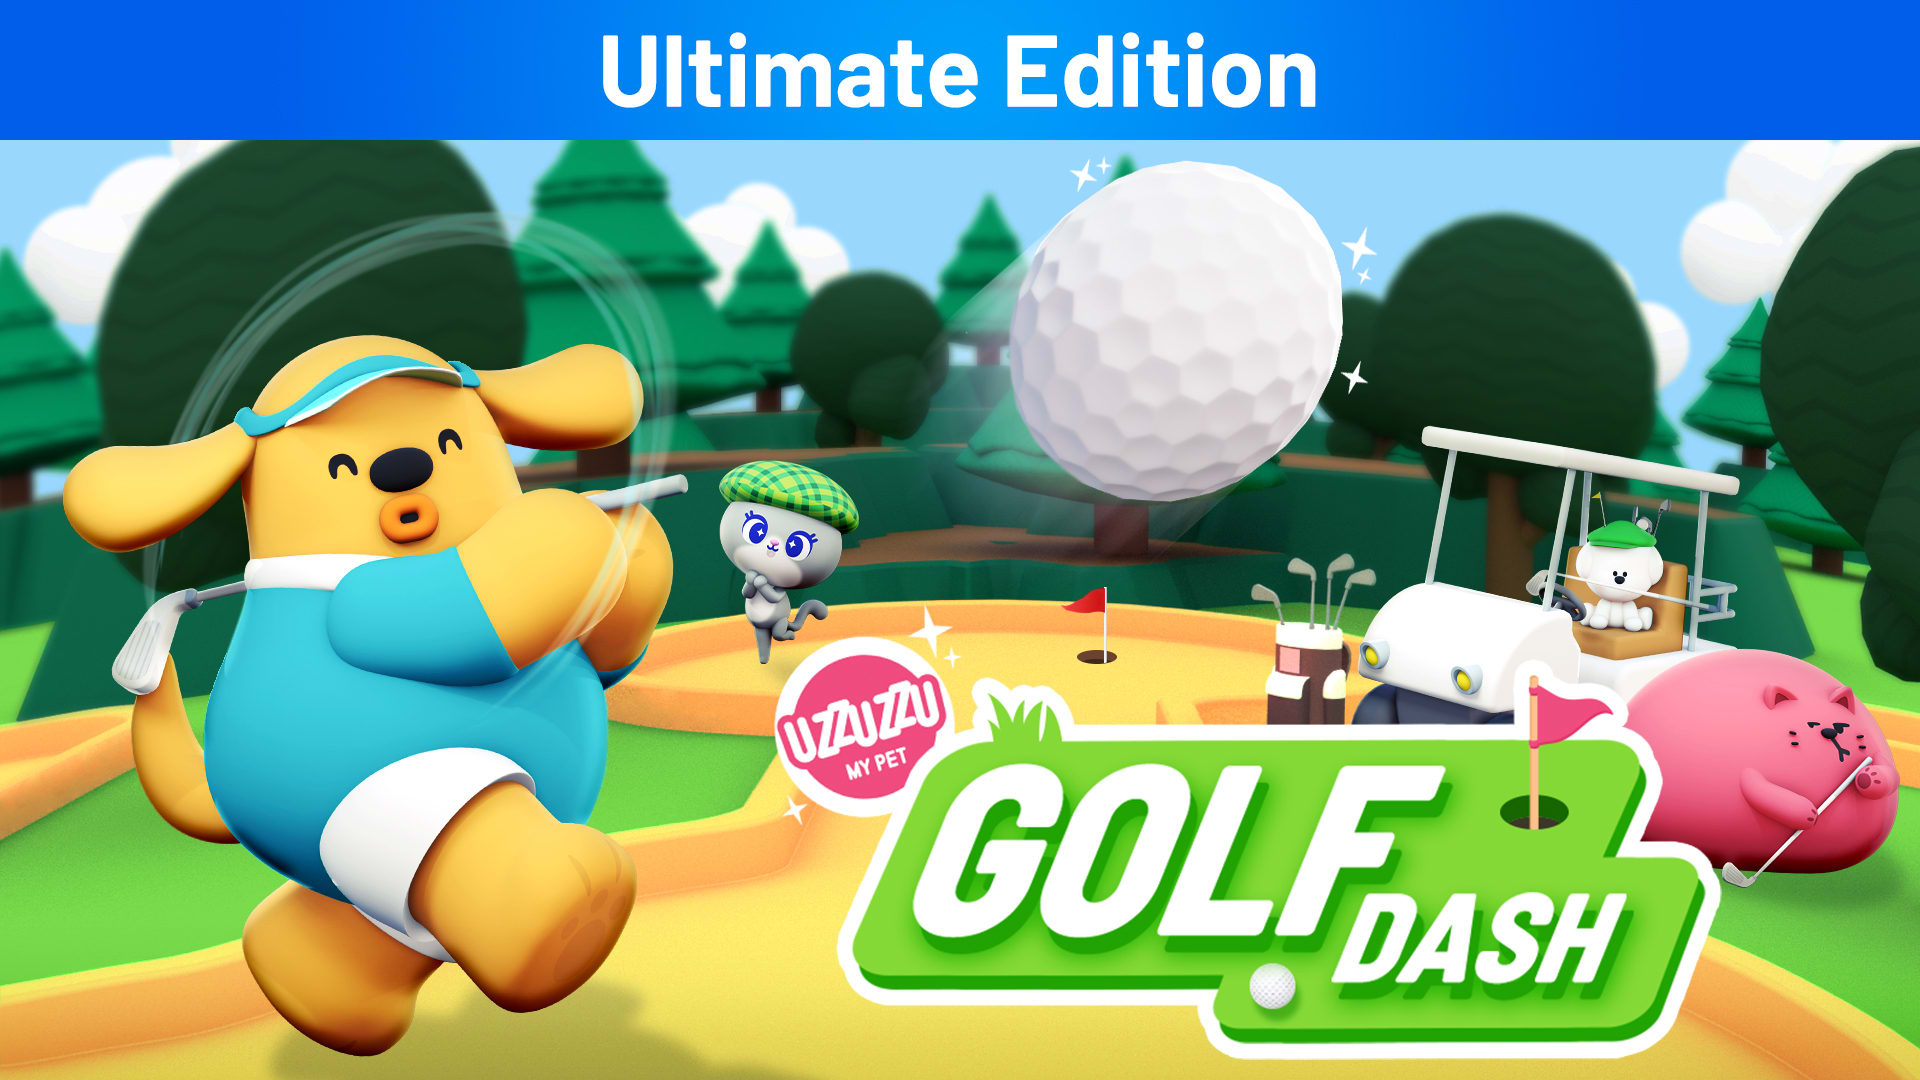 Uzzuzzu My Pet - Golf Dash Ultimate Edition